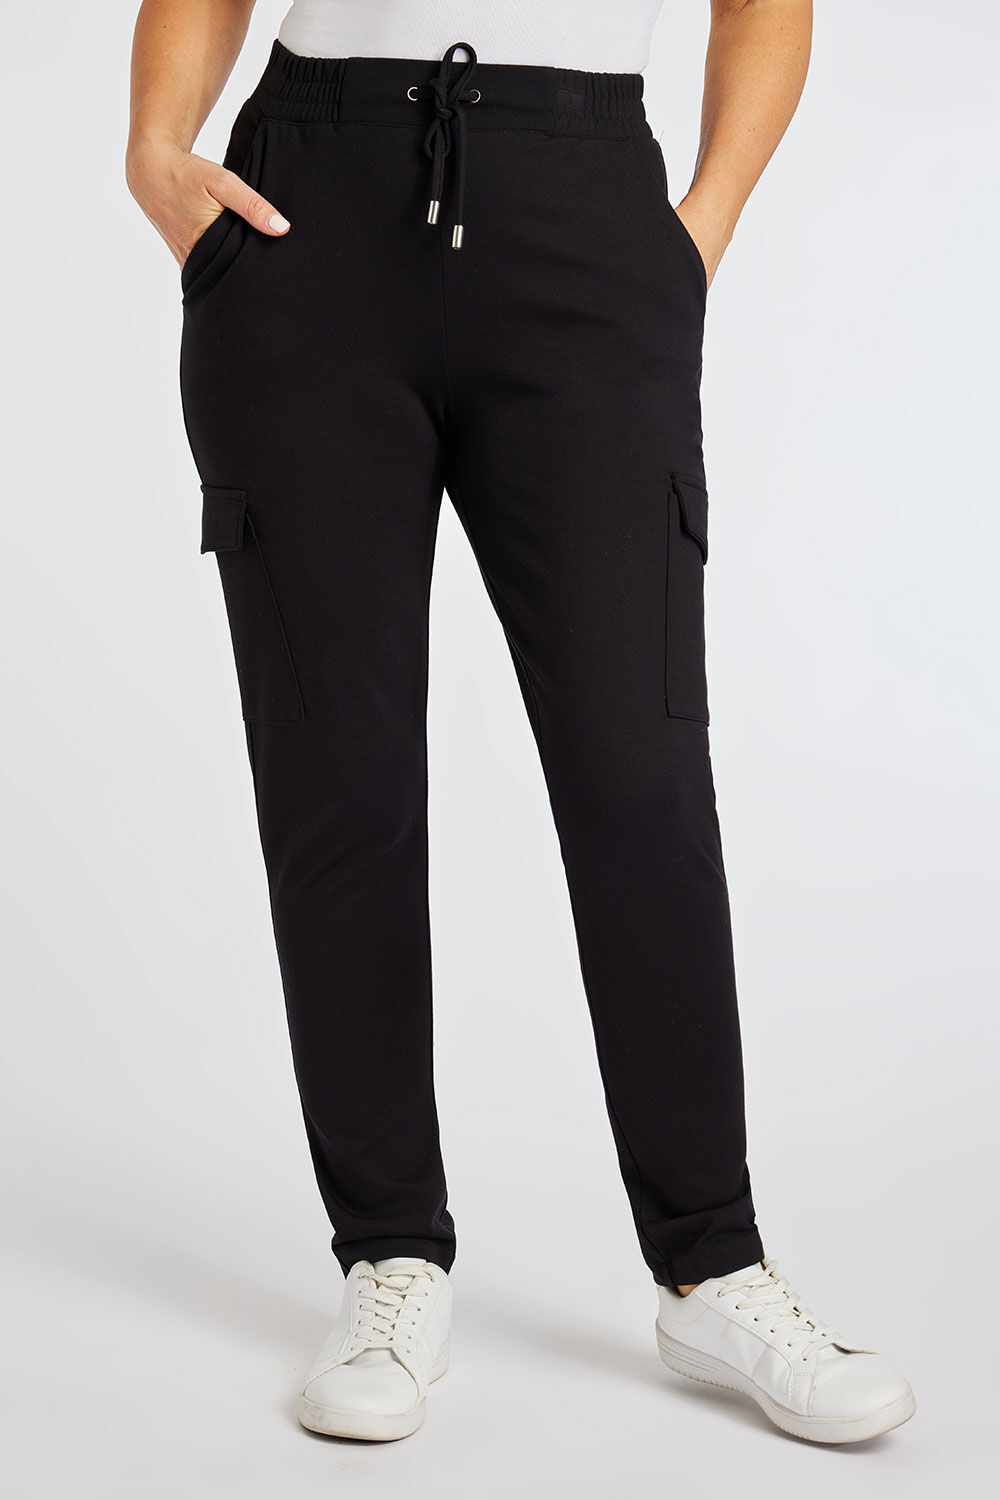 bonmarche black plain ponte cargo tapered leg trousers